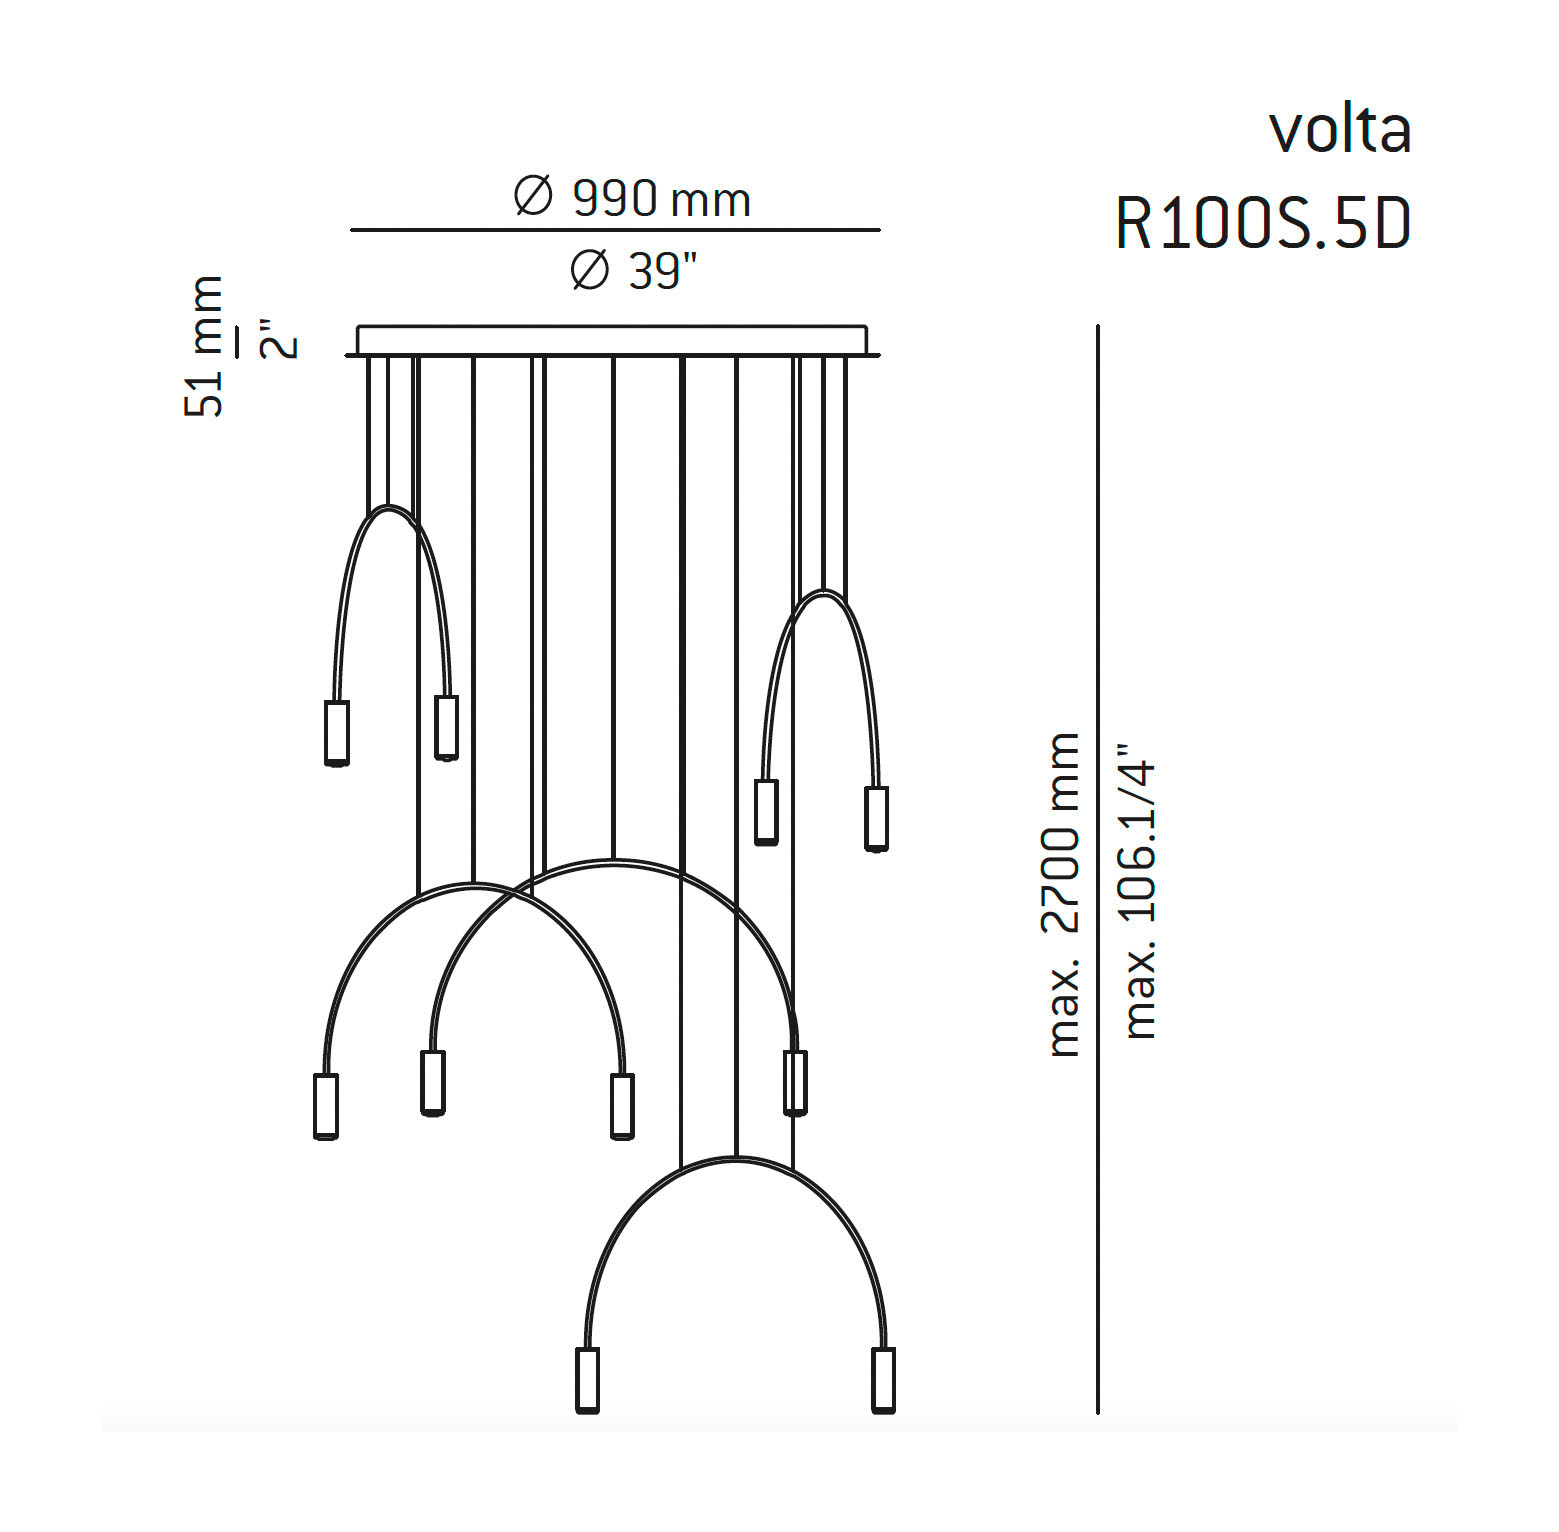 Medidas Volta modelo R100S.5D de suspensión de Estiluz